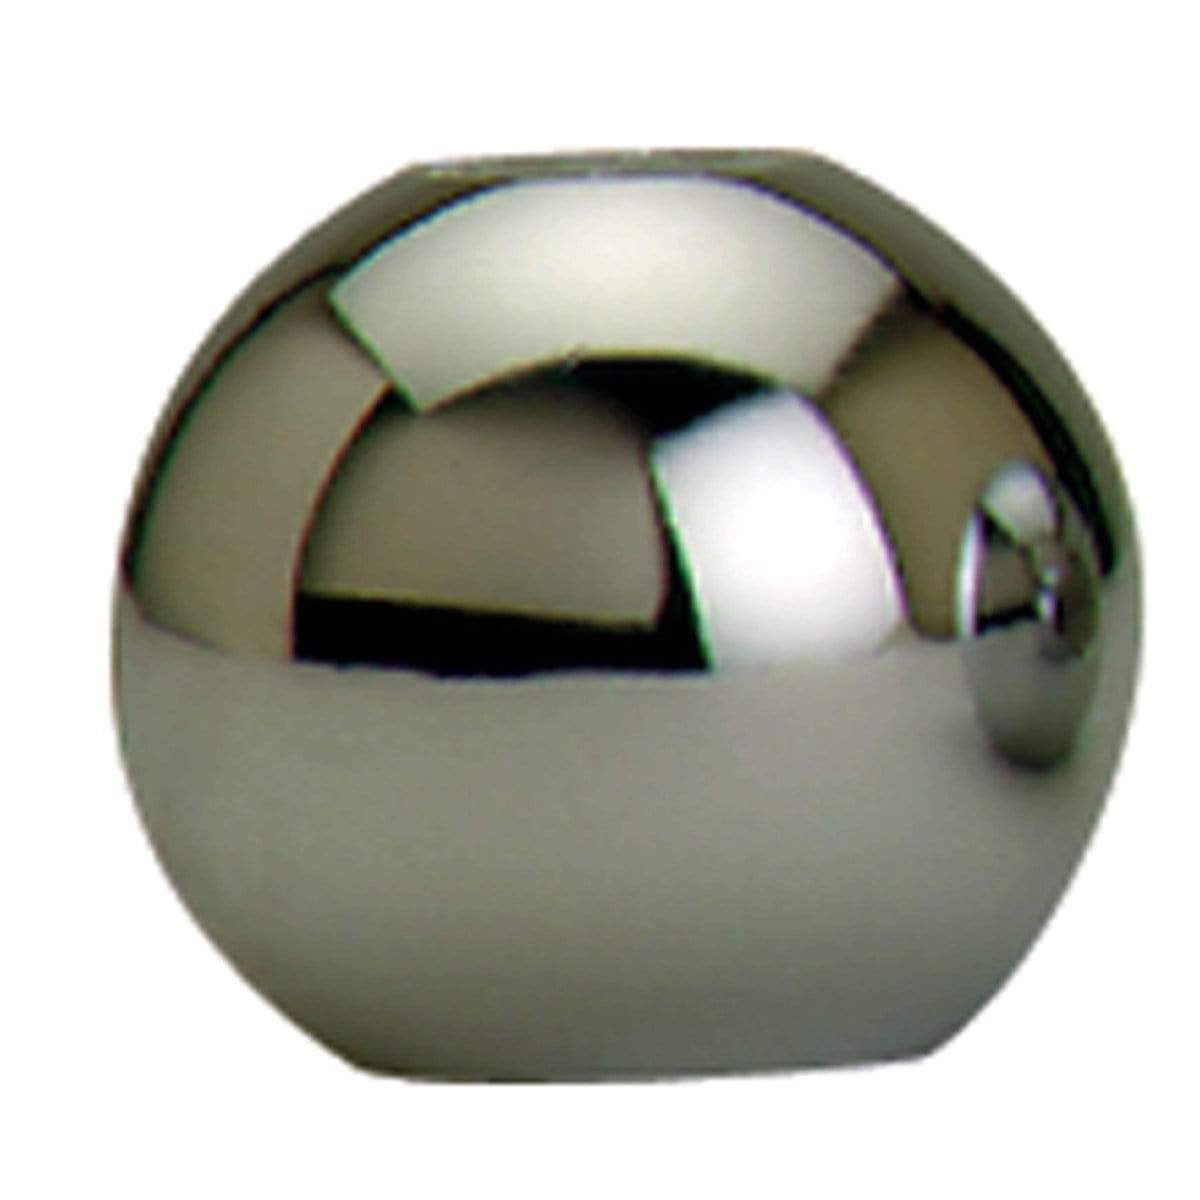 Convert-a-Ball Qualifies for Free Shipping Convert-A-Ball 1-7/8" Ball 944300 #300B